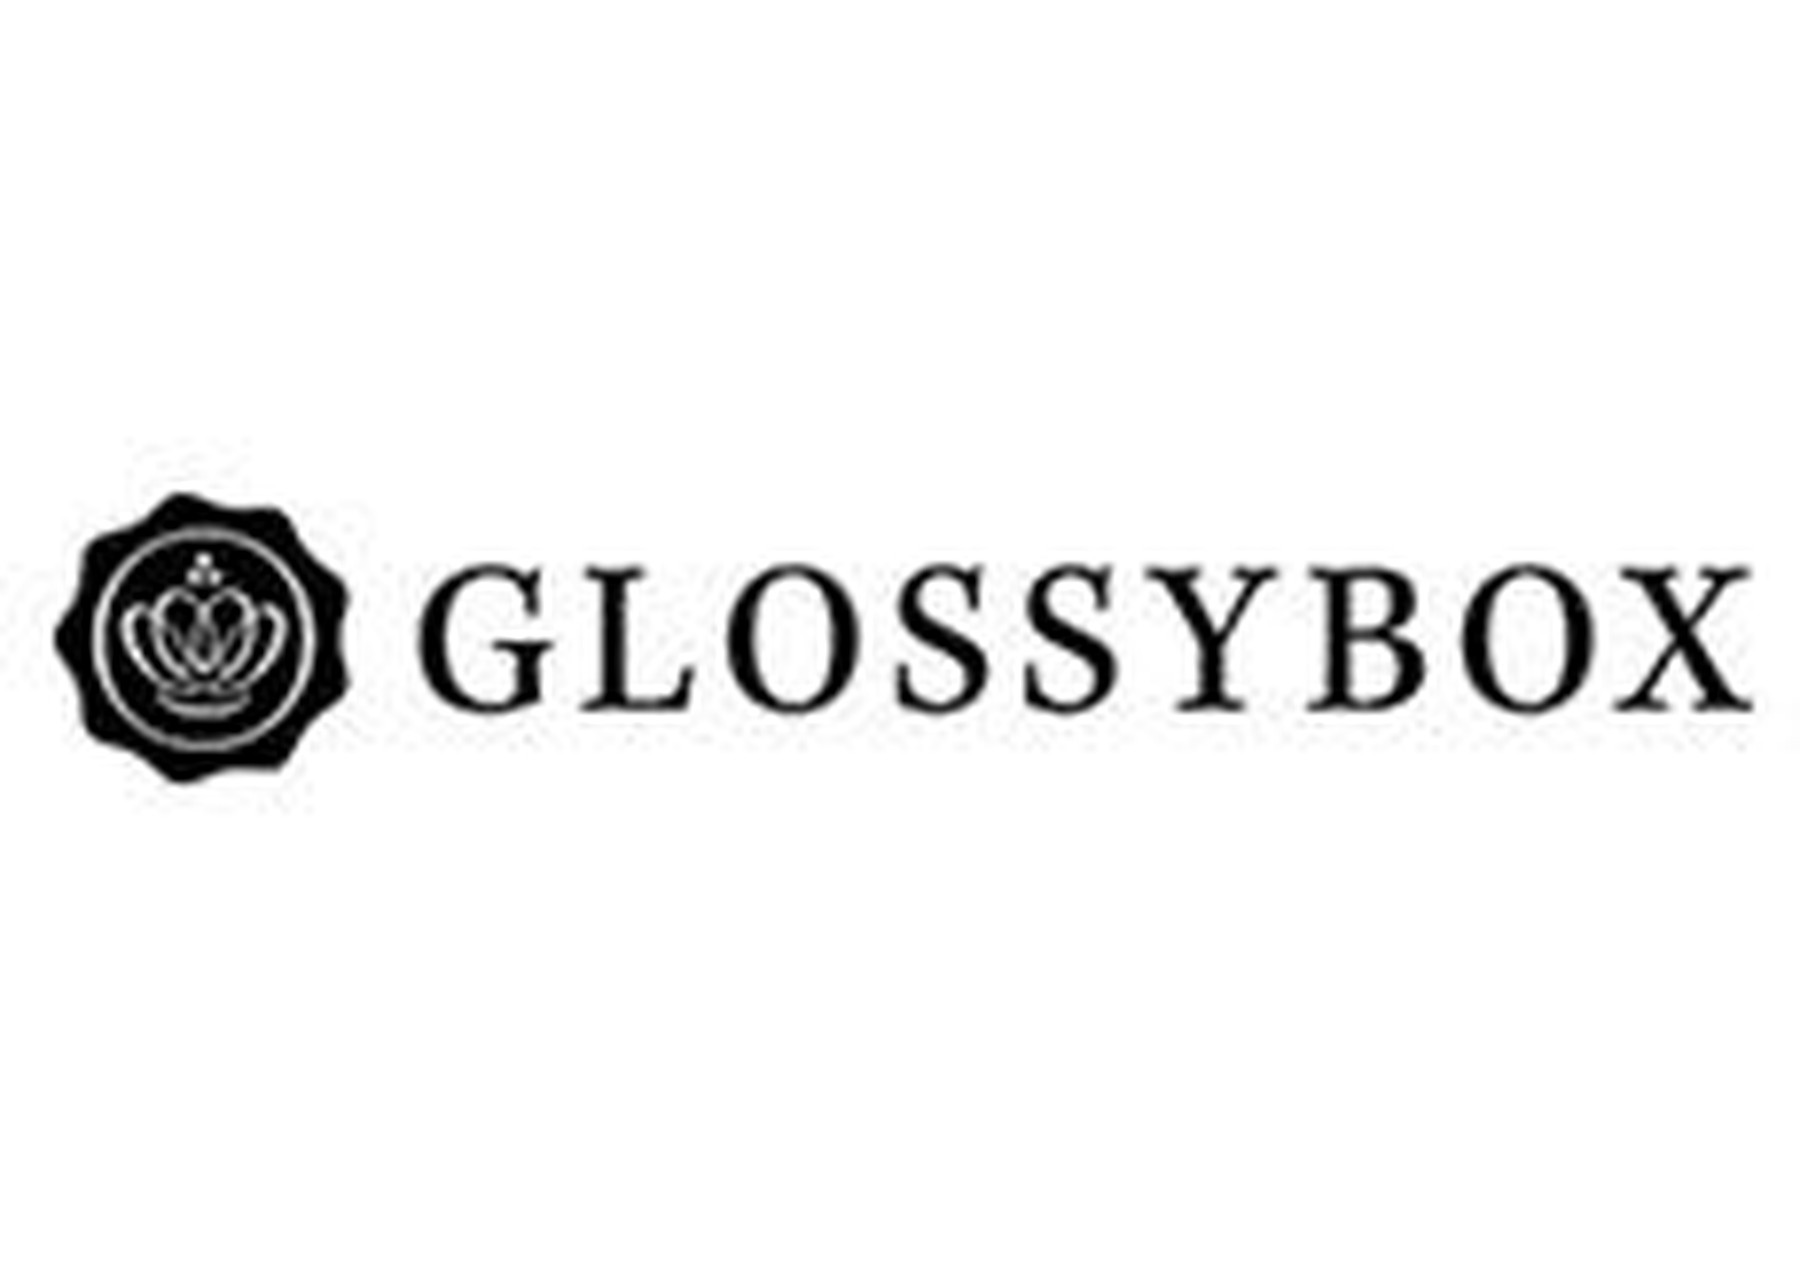 Glossybox rabattkode